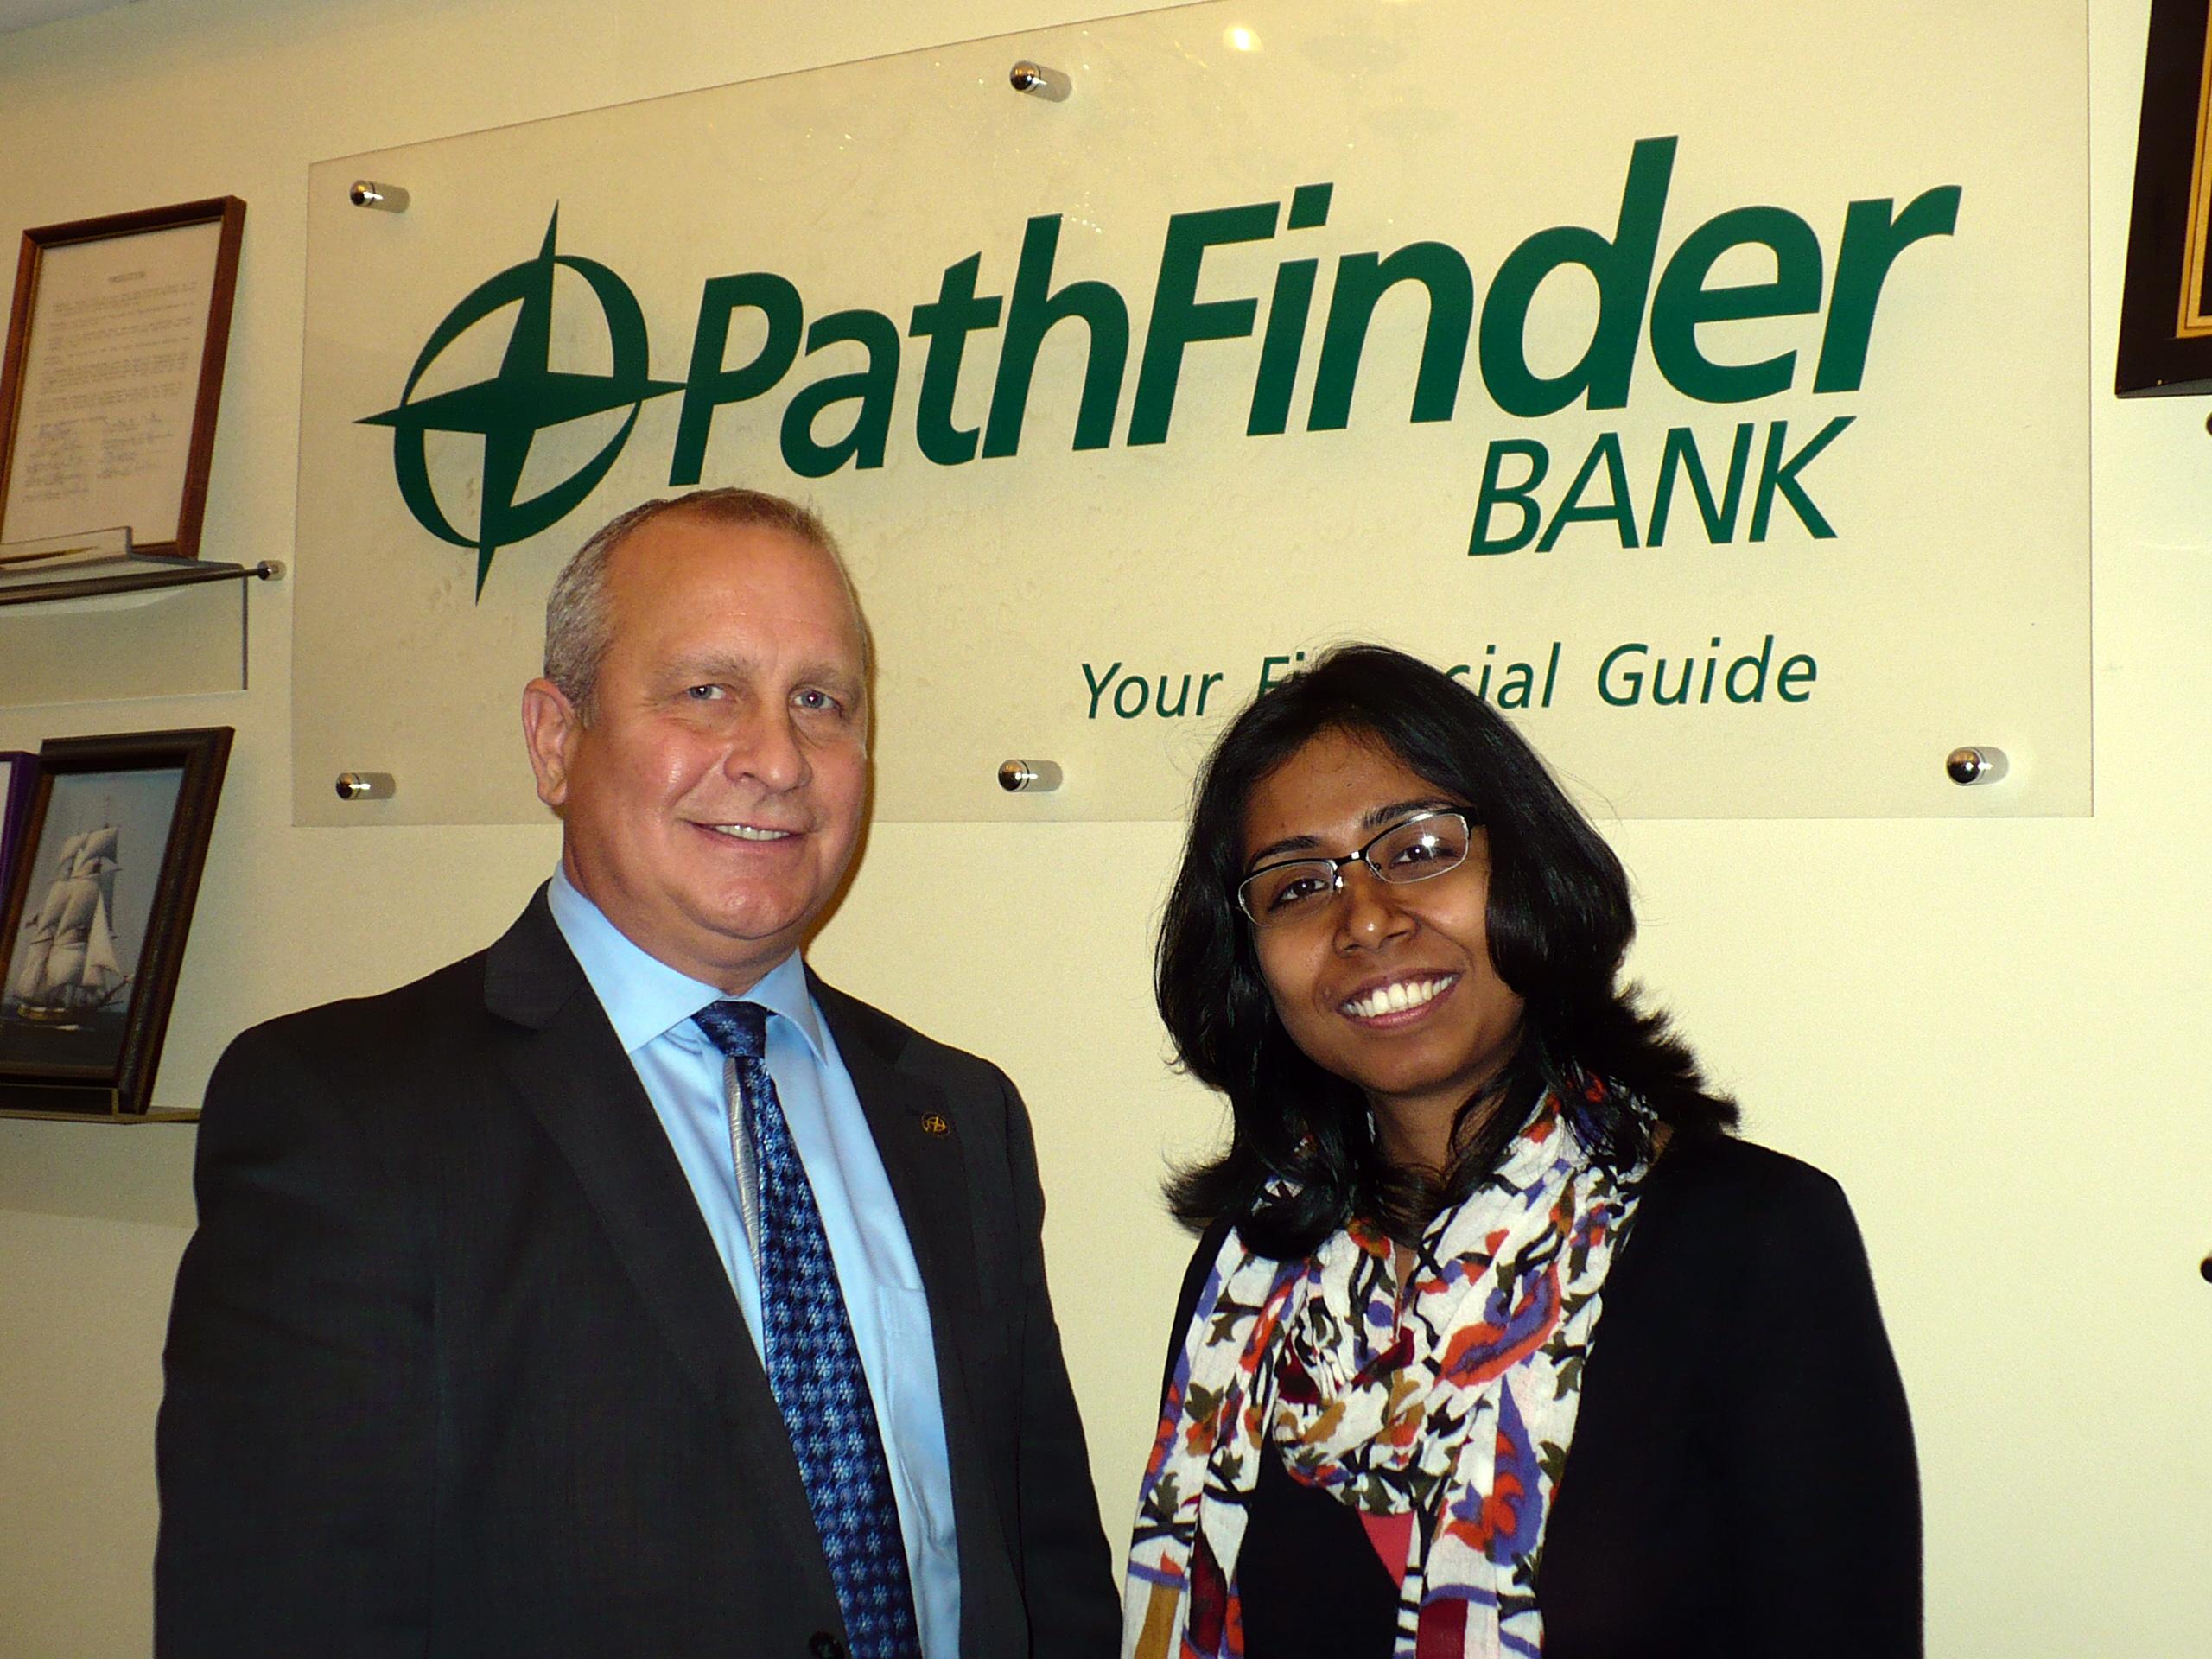 Pathfinder Bank